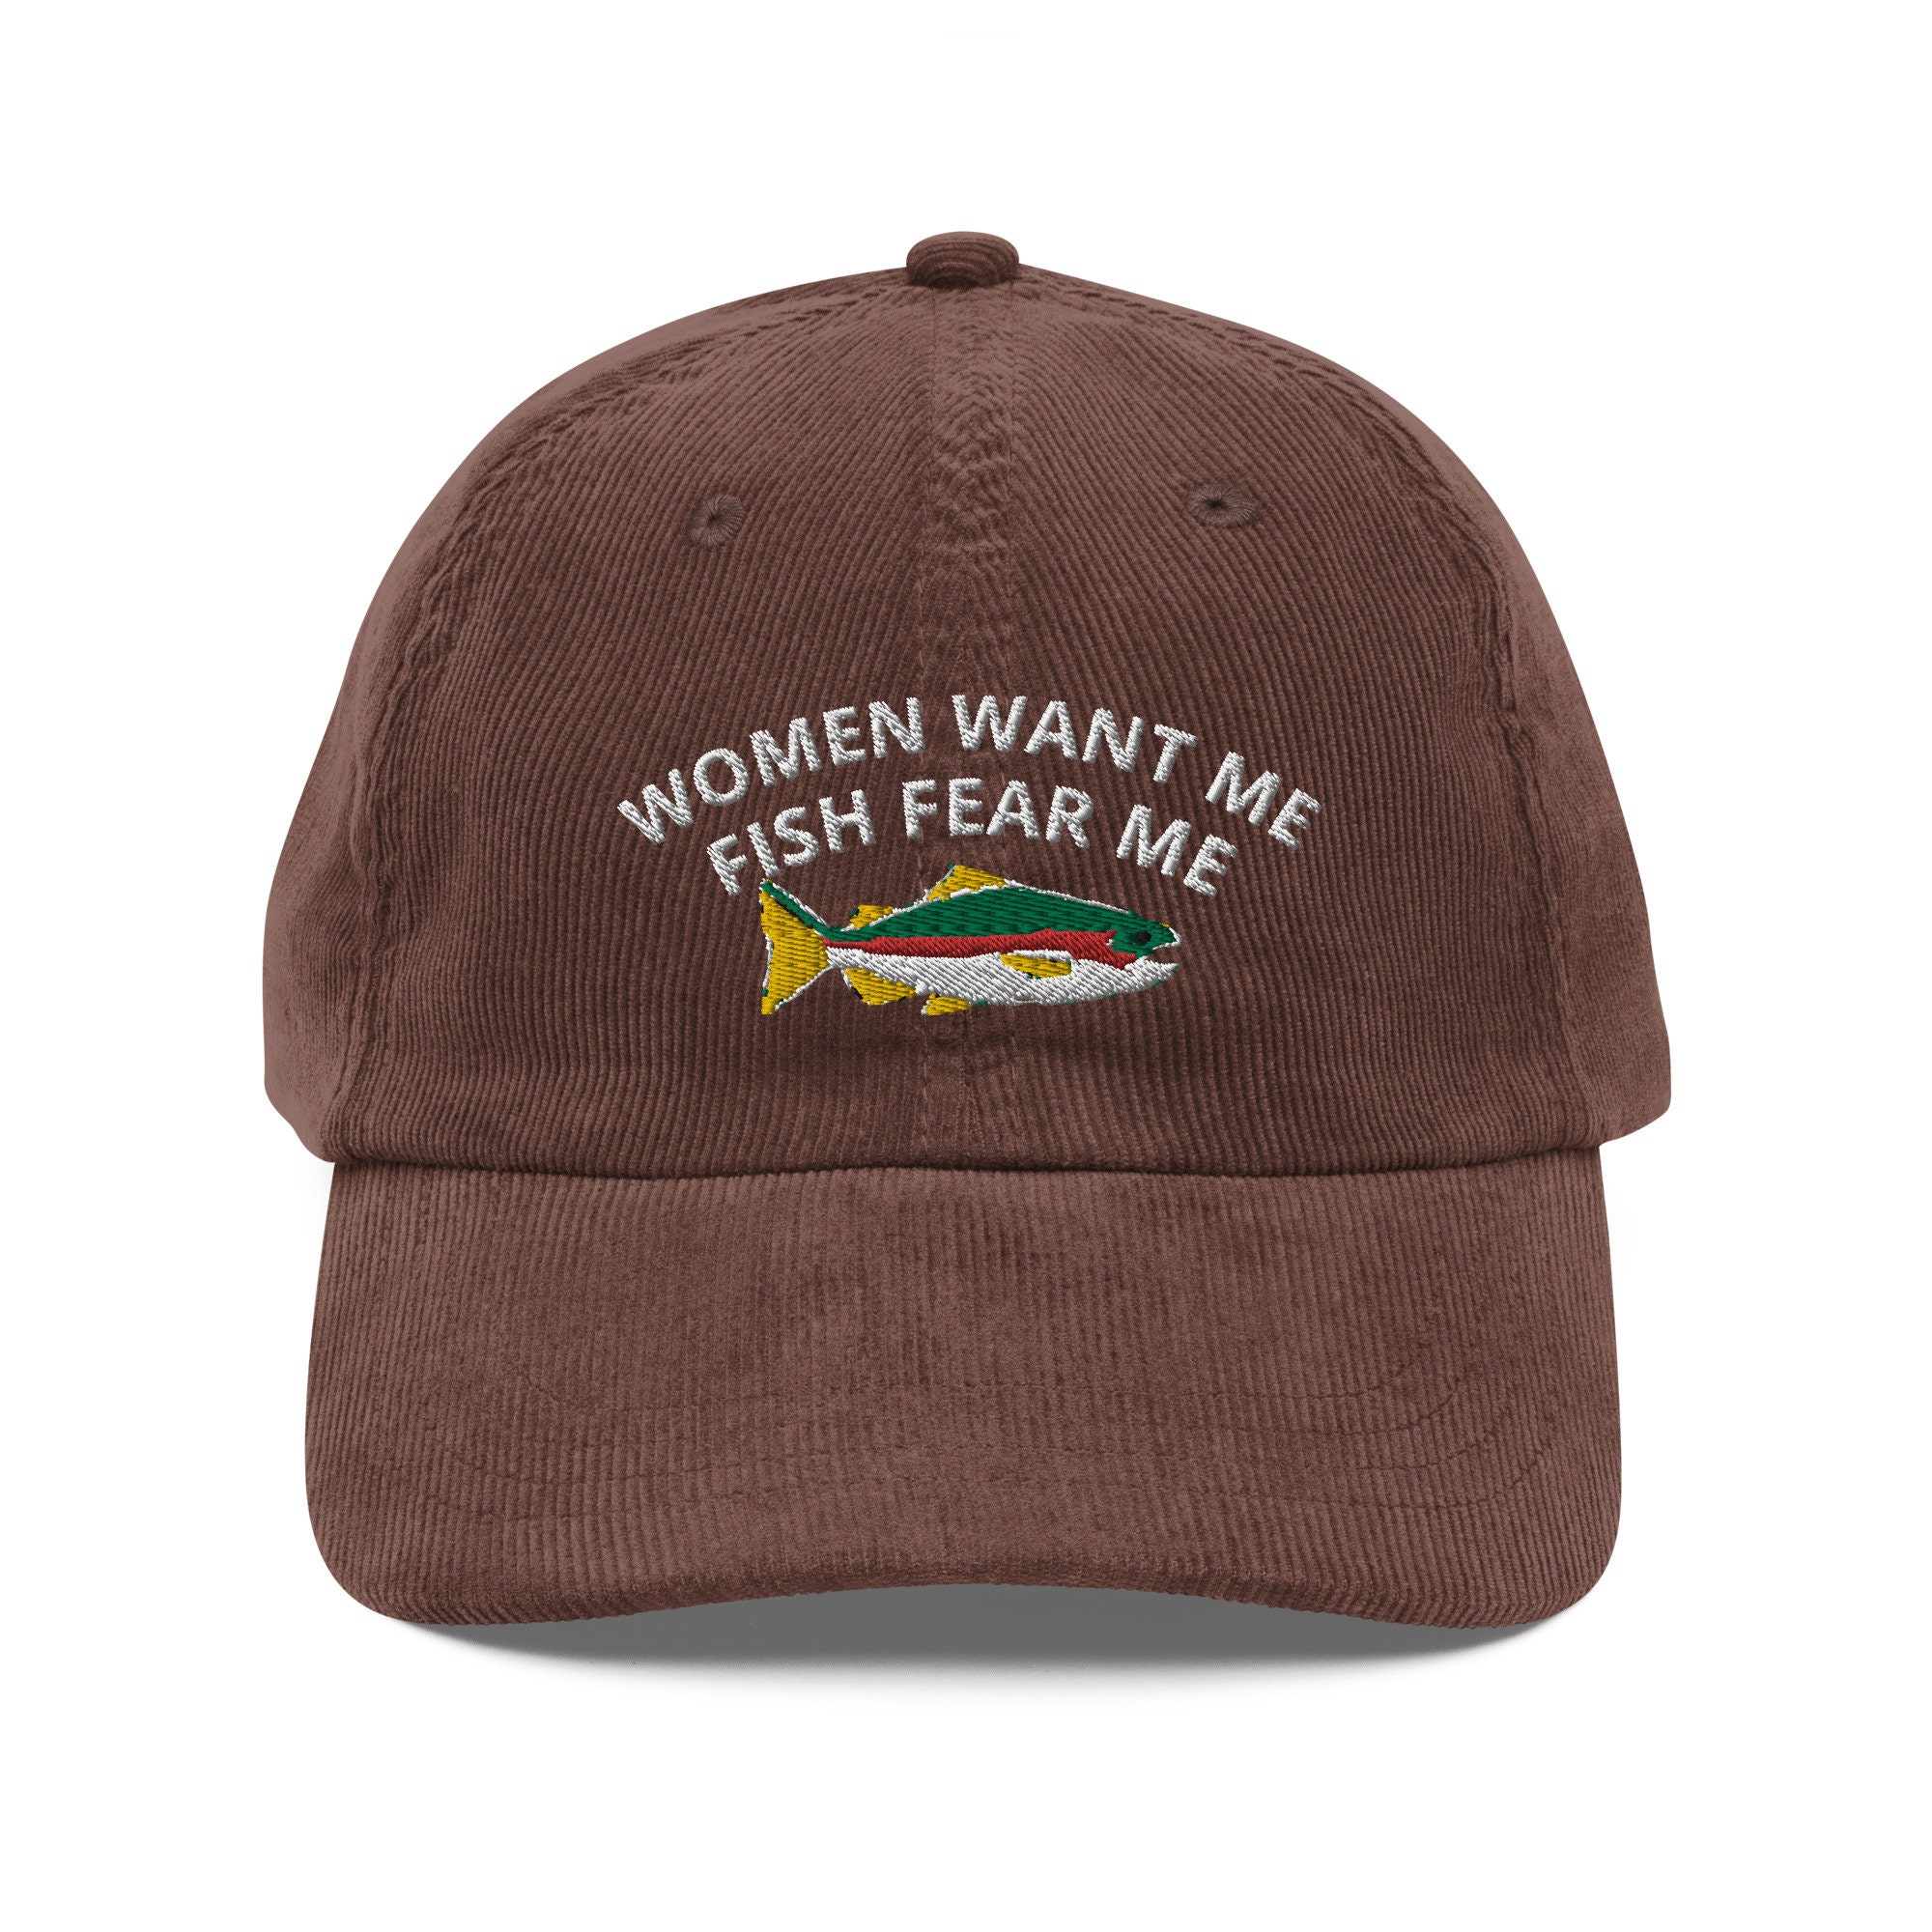 Women Want Me Fish Fear Me 